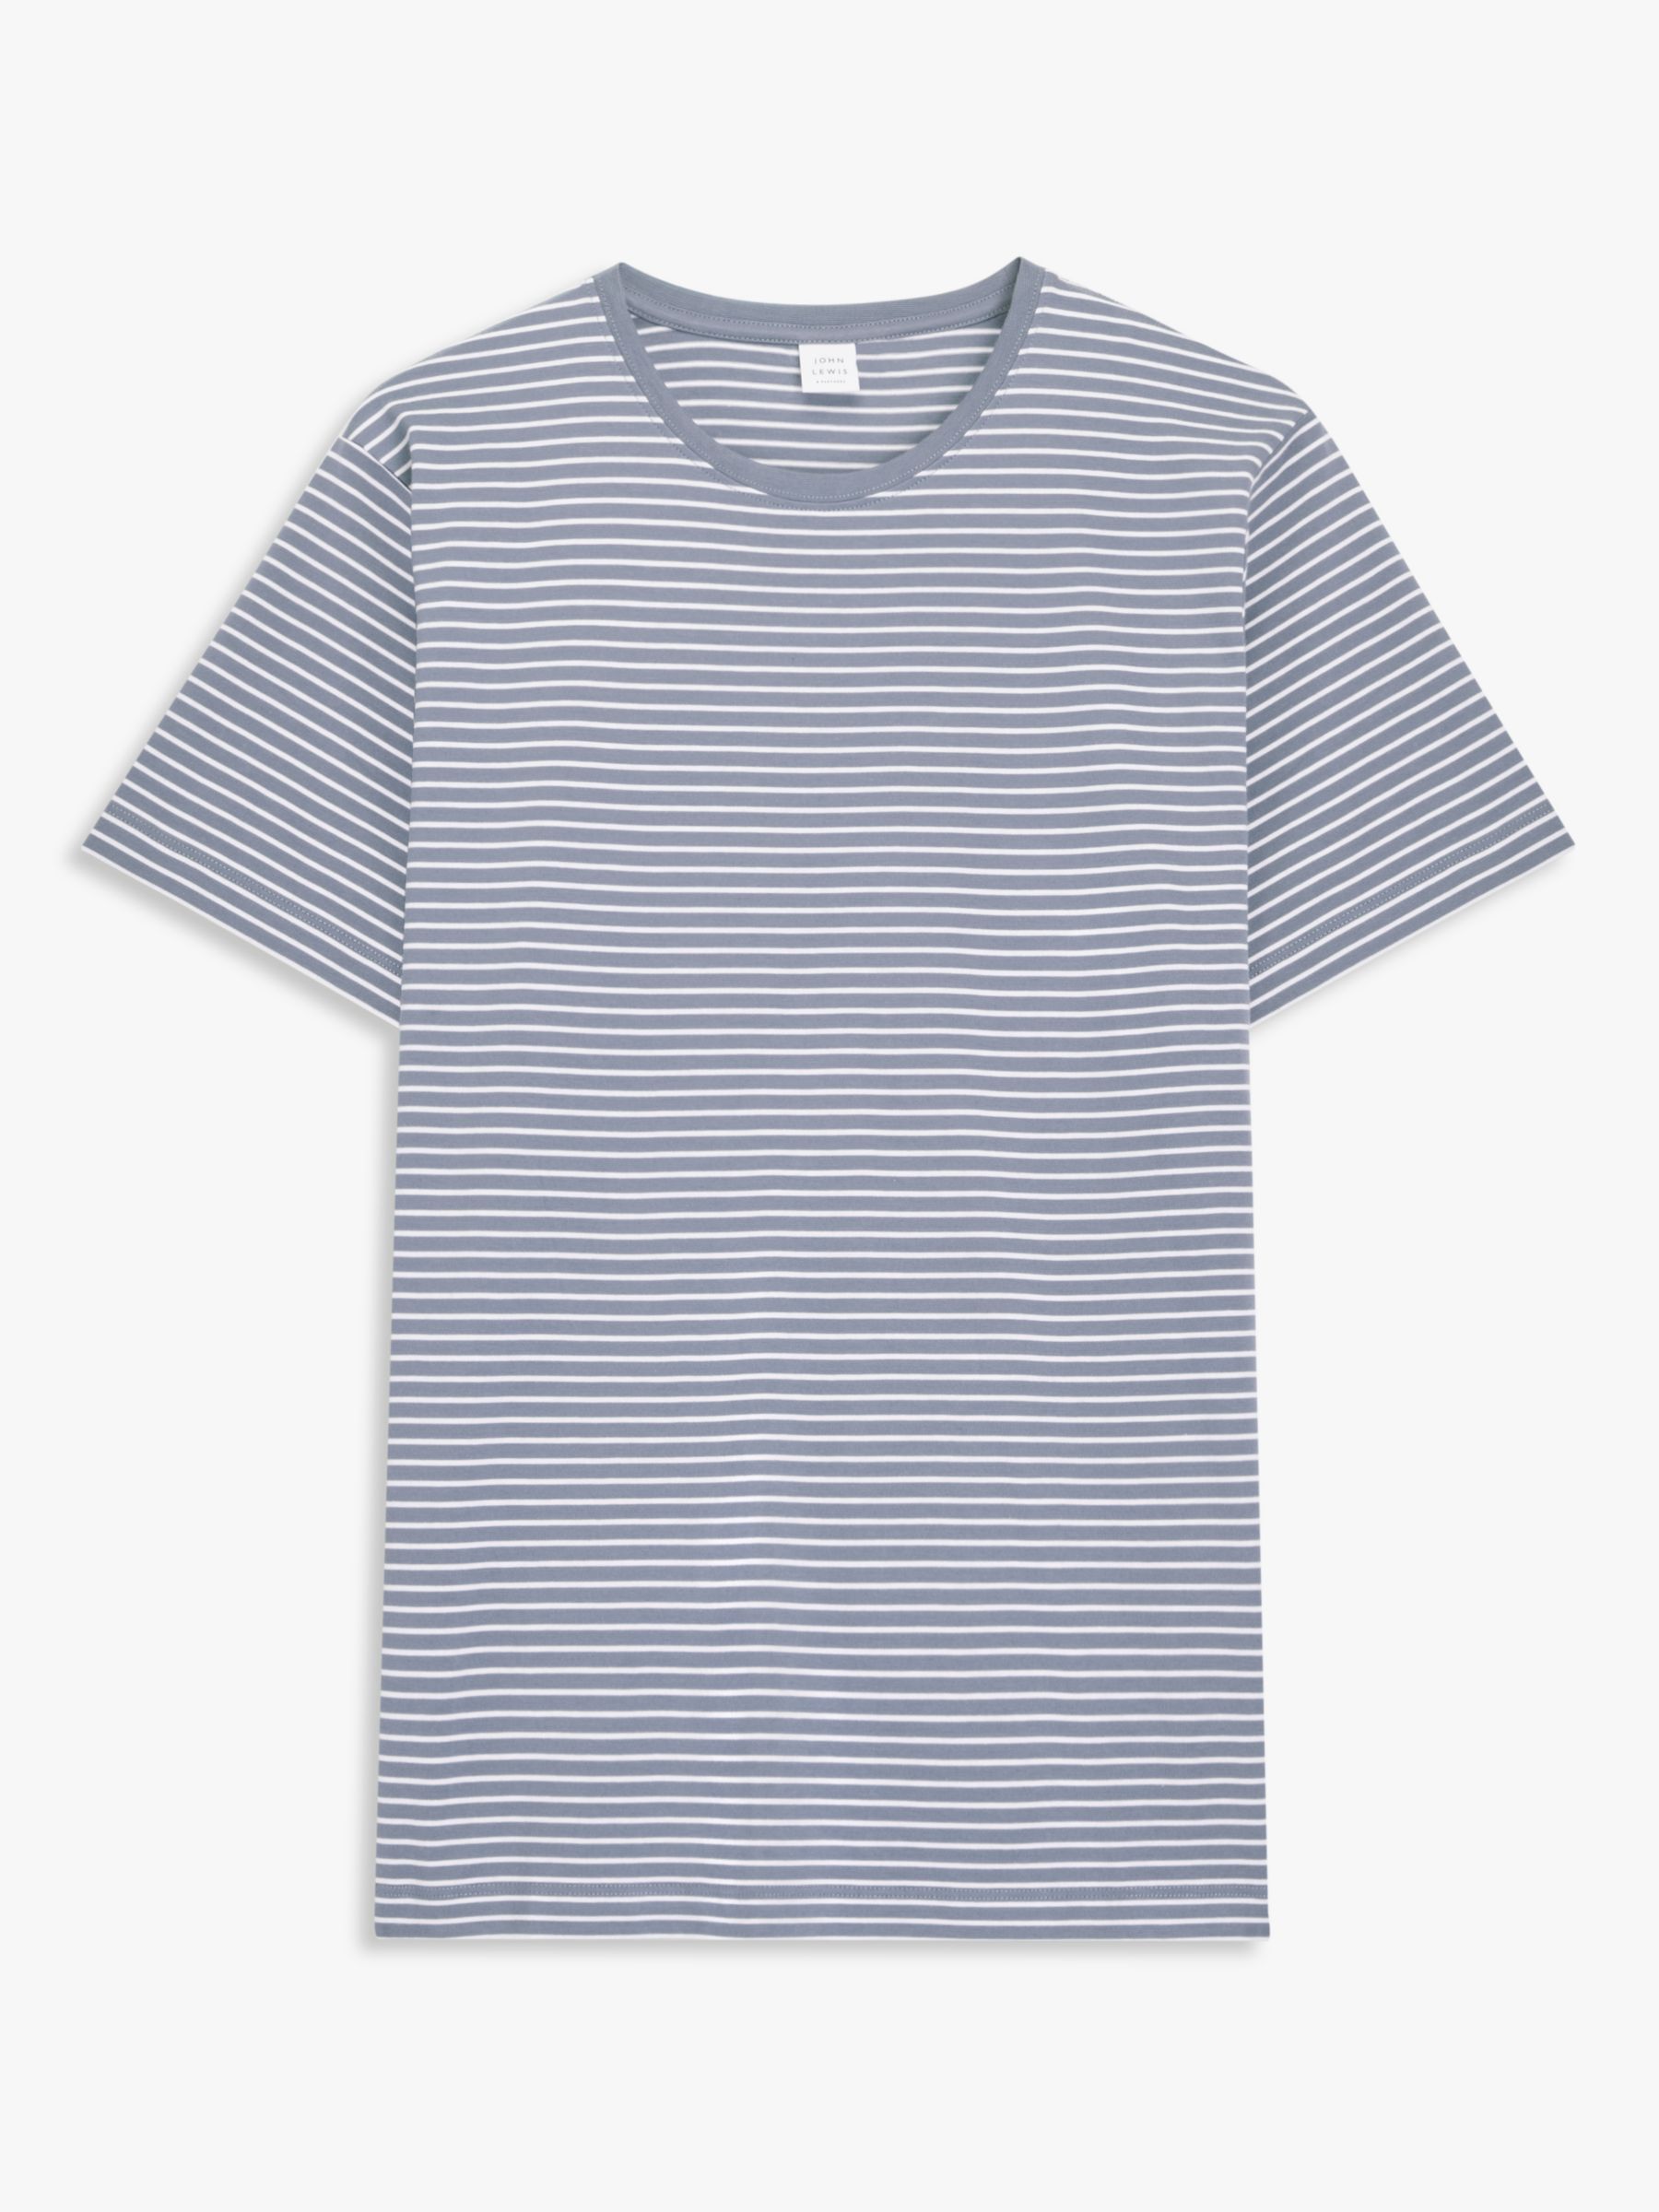 Buy John Lewis Supima Cotton Fine Stripe T-Shirt Online at johnlewis.com